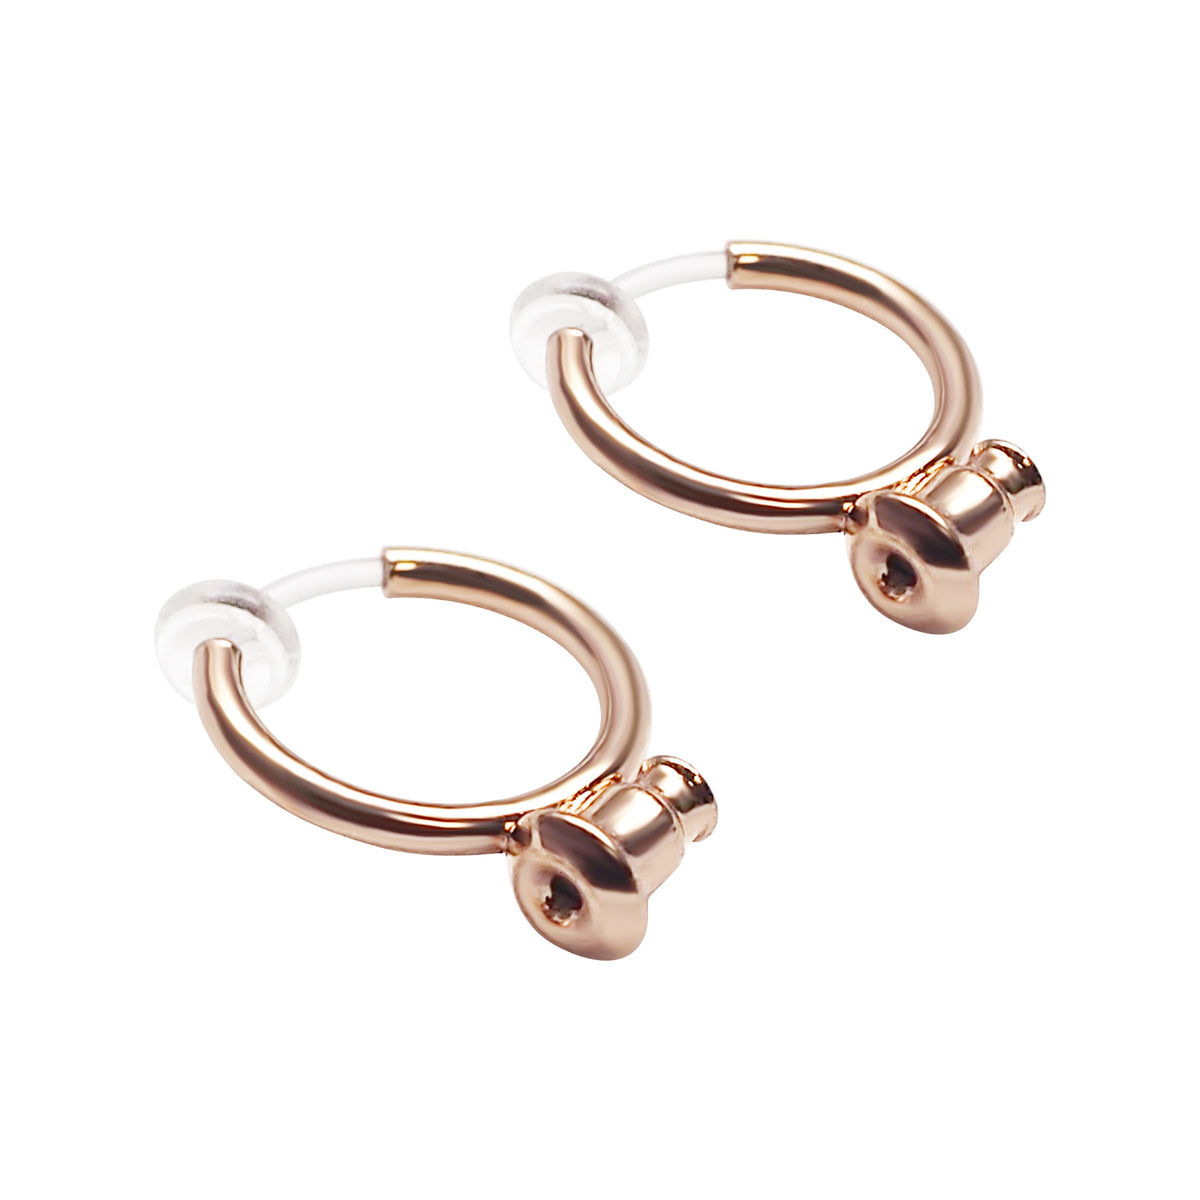 Comfortable Clip on Hoop Earrings Mens Gold Clip on Earrings